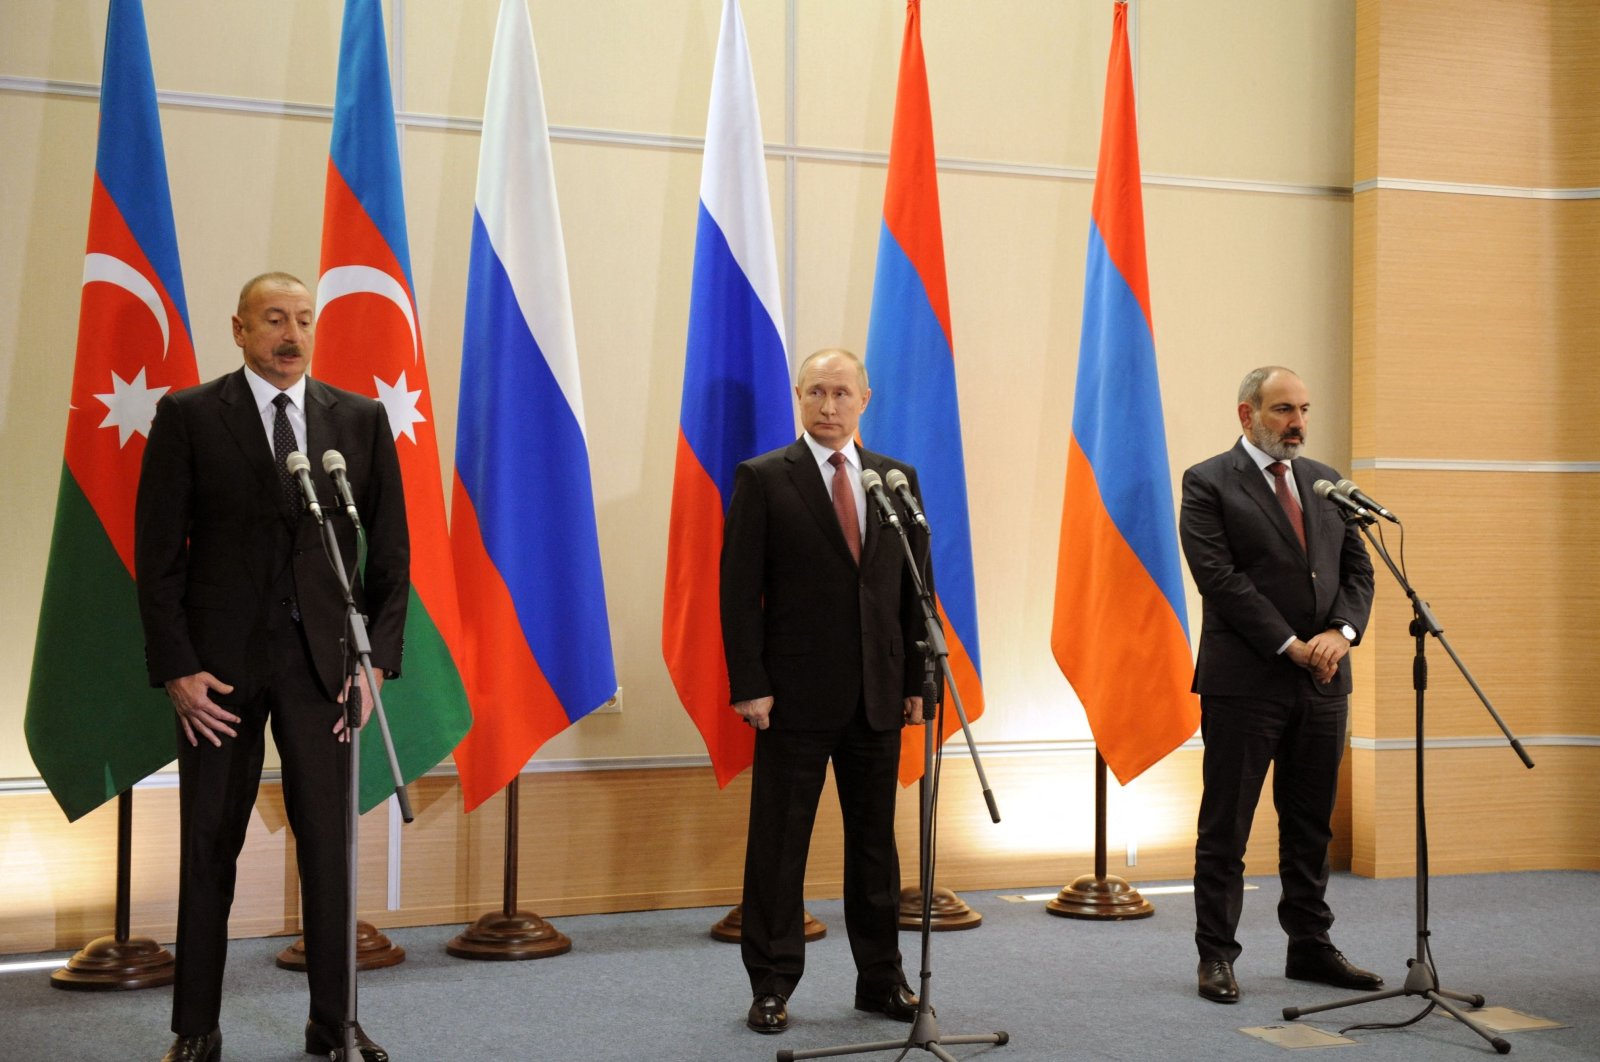 Azerbaijani President Ilham Aliyev, Russian President Vladimir Putin and Armenian Prime Minister Nikol Pashinian after their meeting in Sochi, Russia, Nov. 26, 2021. (AFP Photo)